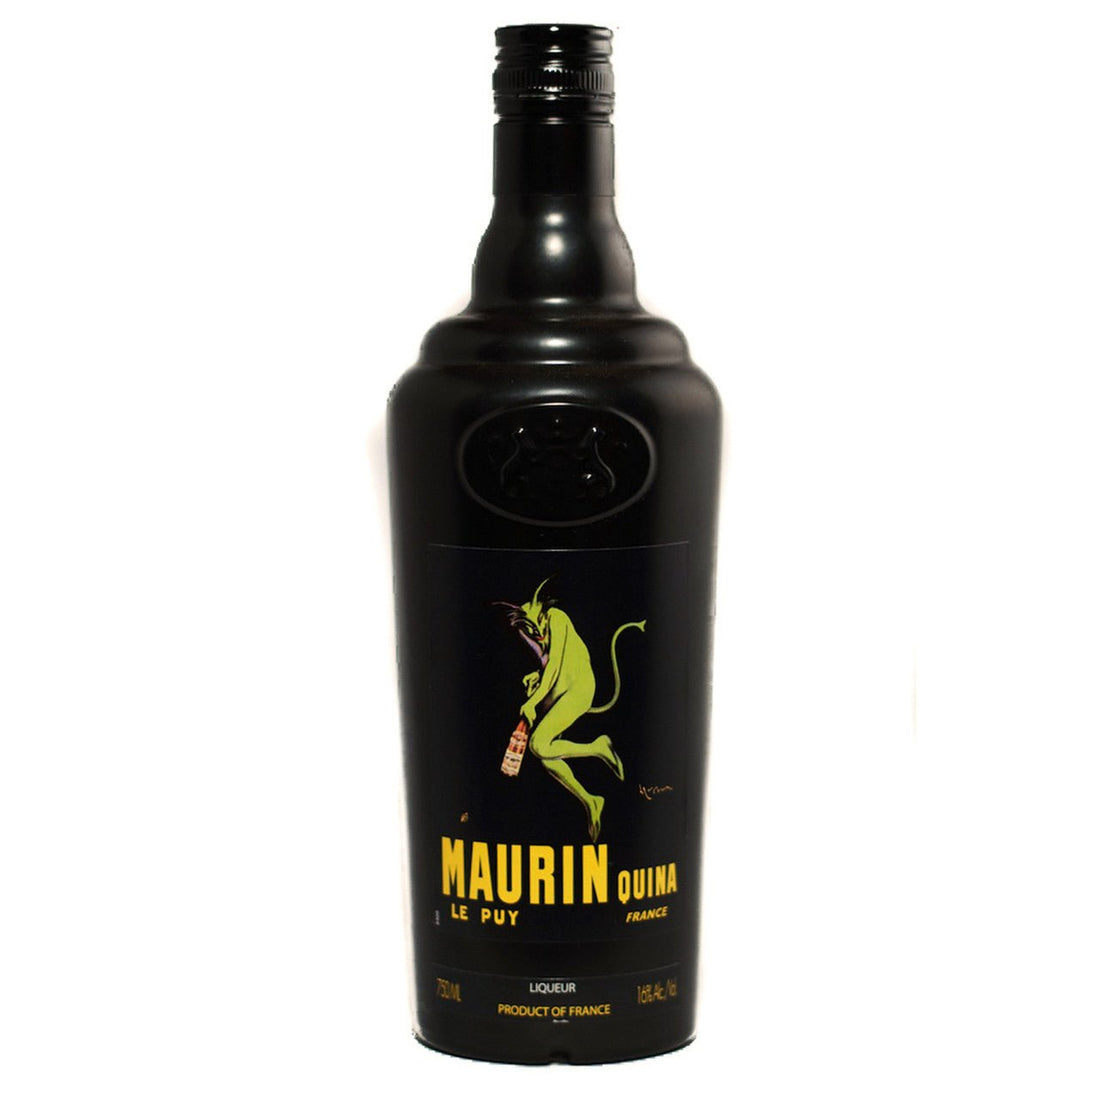 Maurin Quina Liqueur - ShopBourbon.com